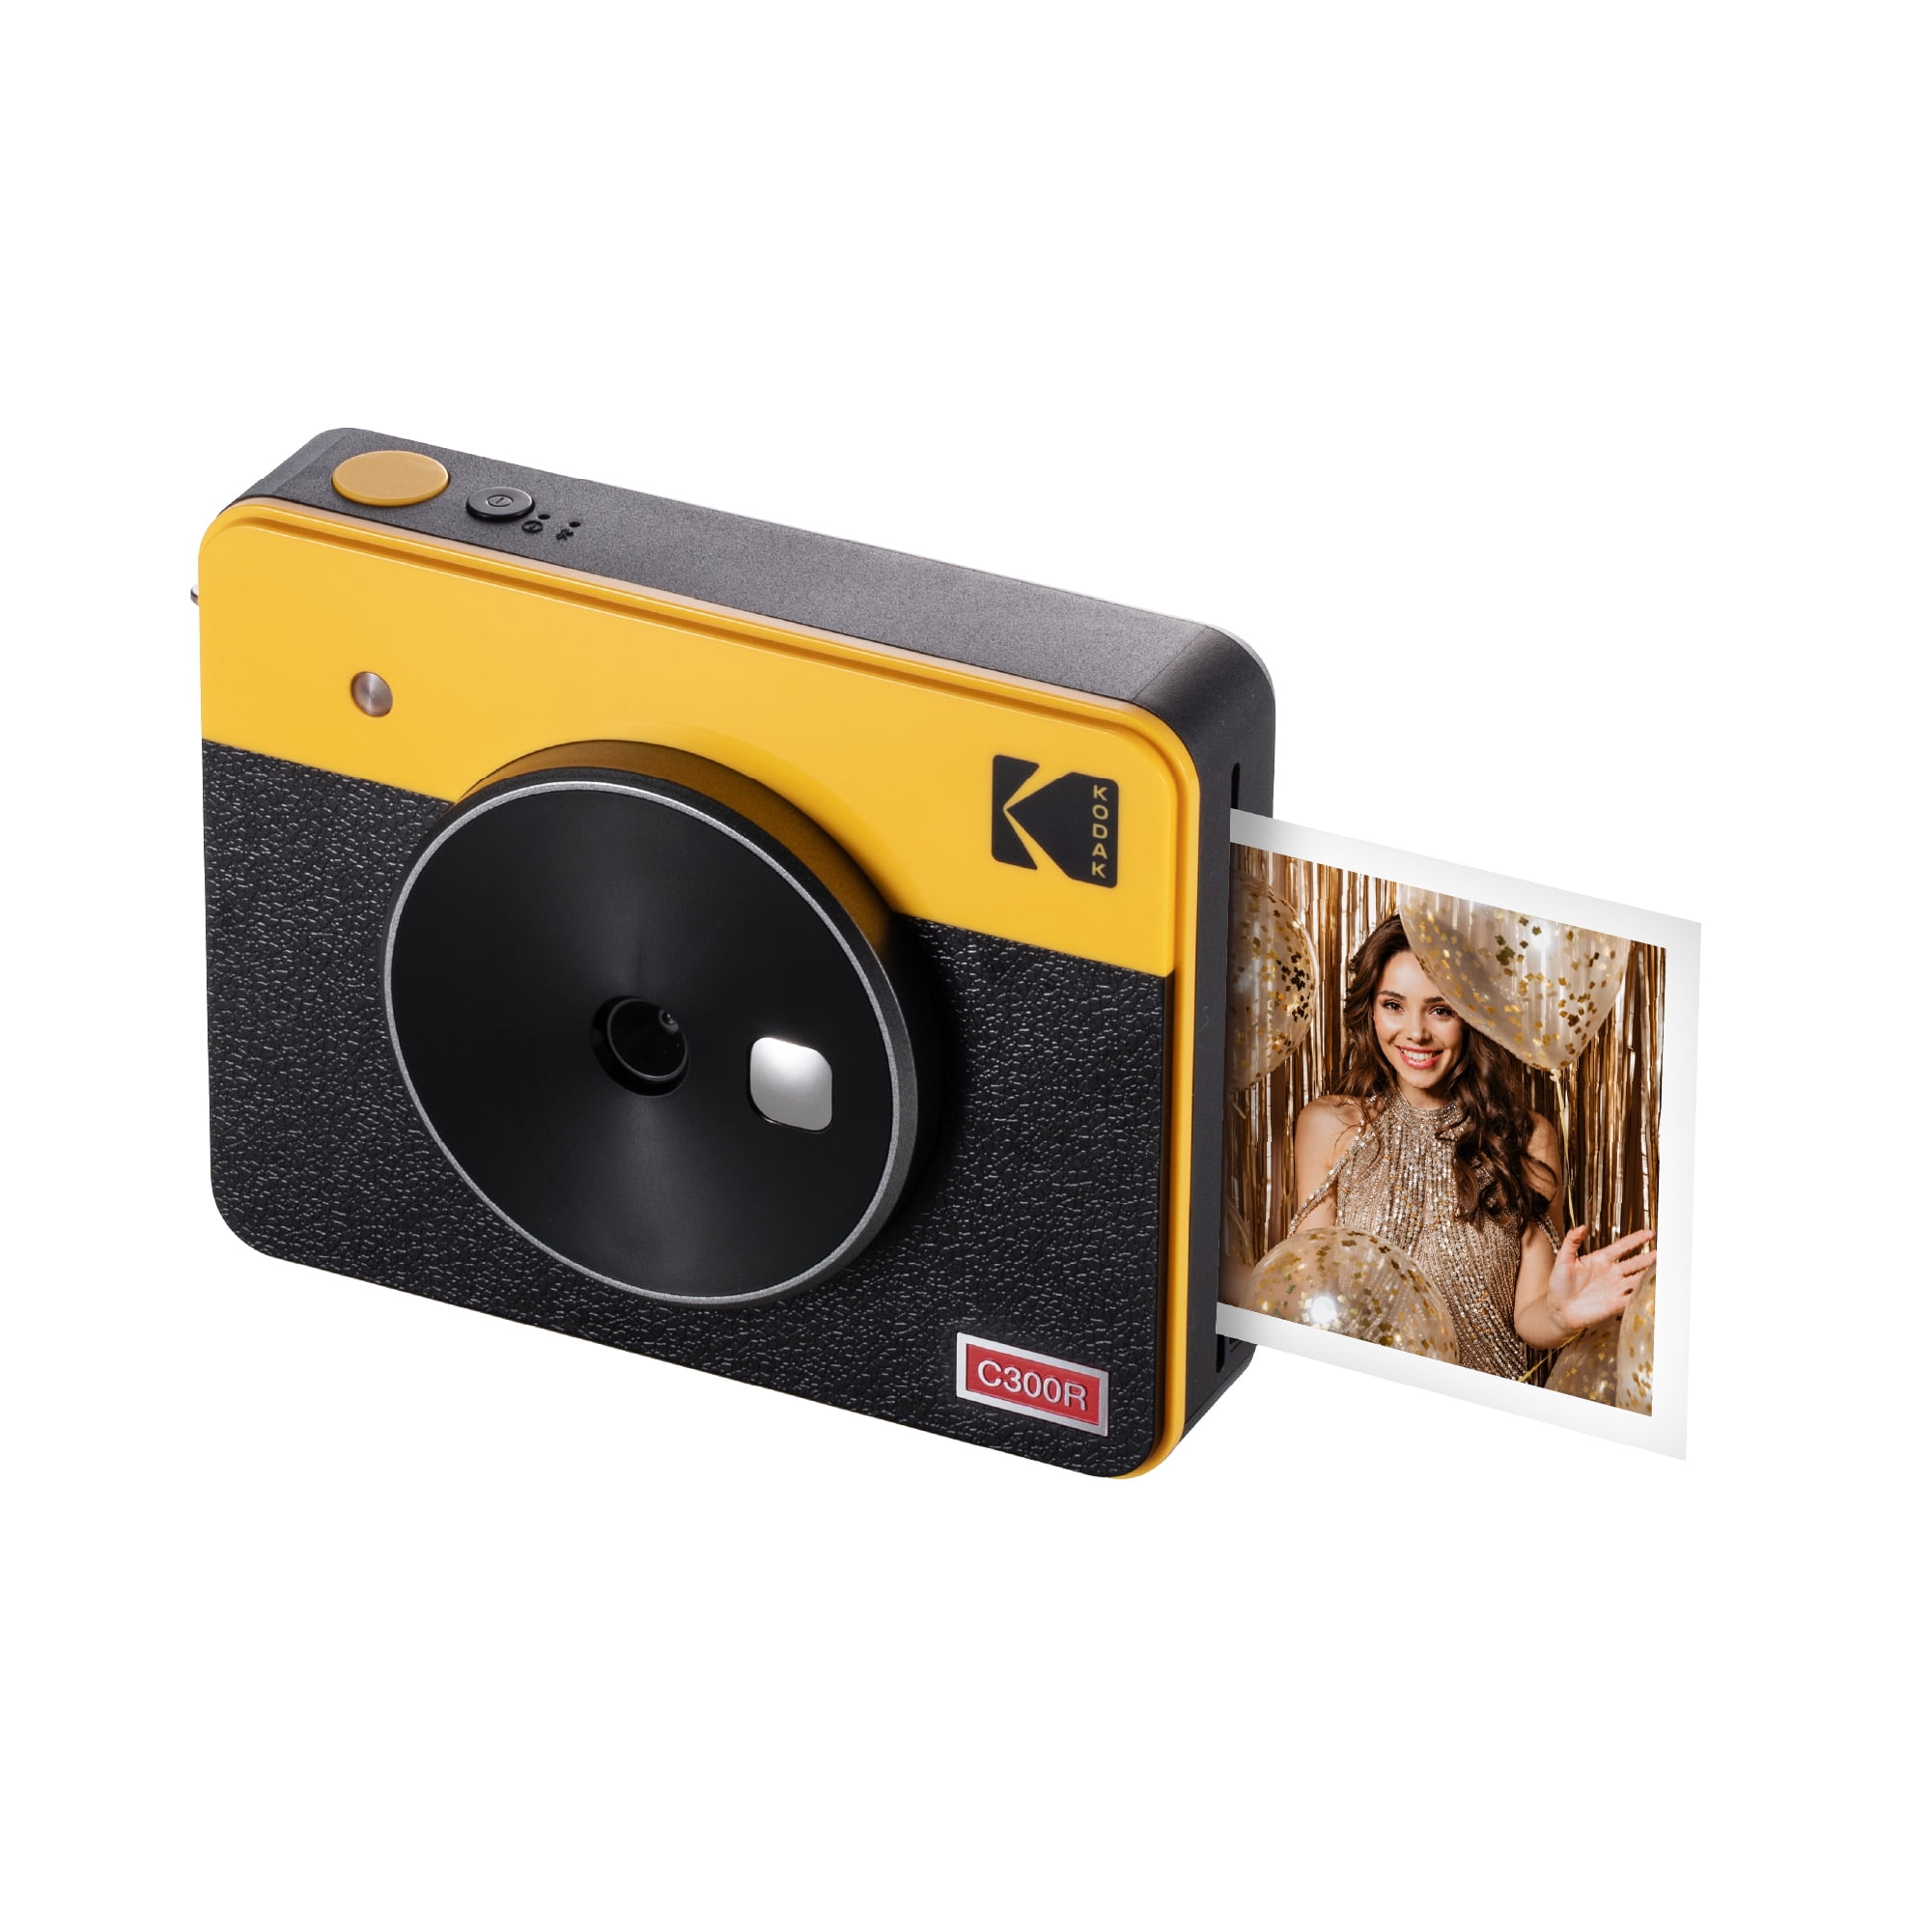 Kodak Mini 2 Retro Portable Photo Printer (Credit card size